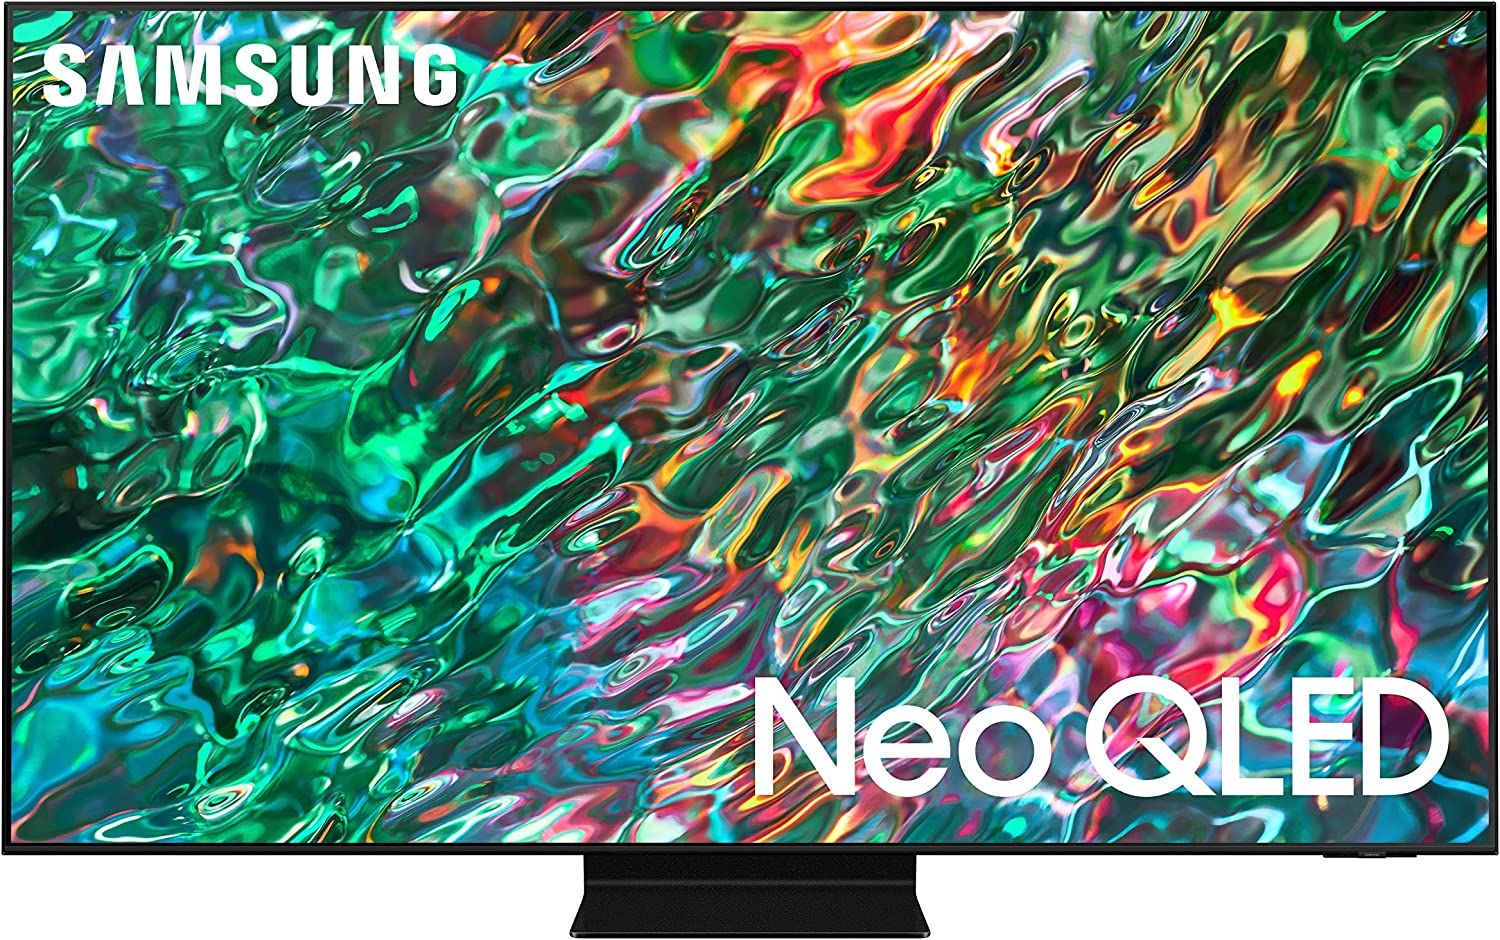 Promo image of the Samsung QN90B QLED 4K TV.